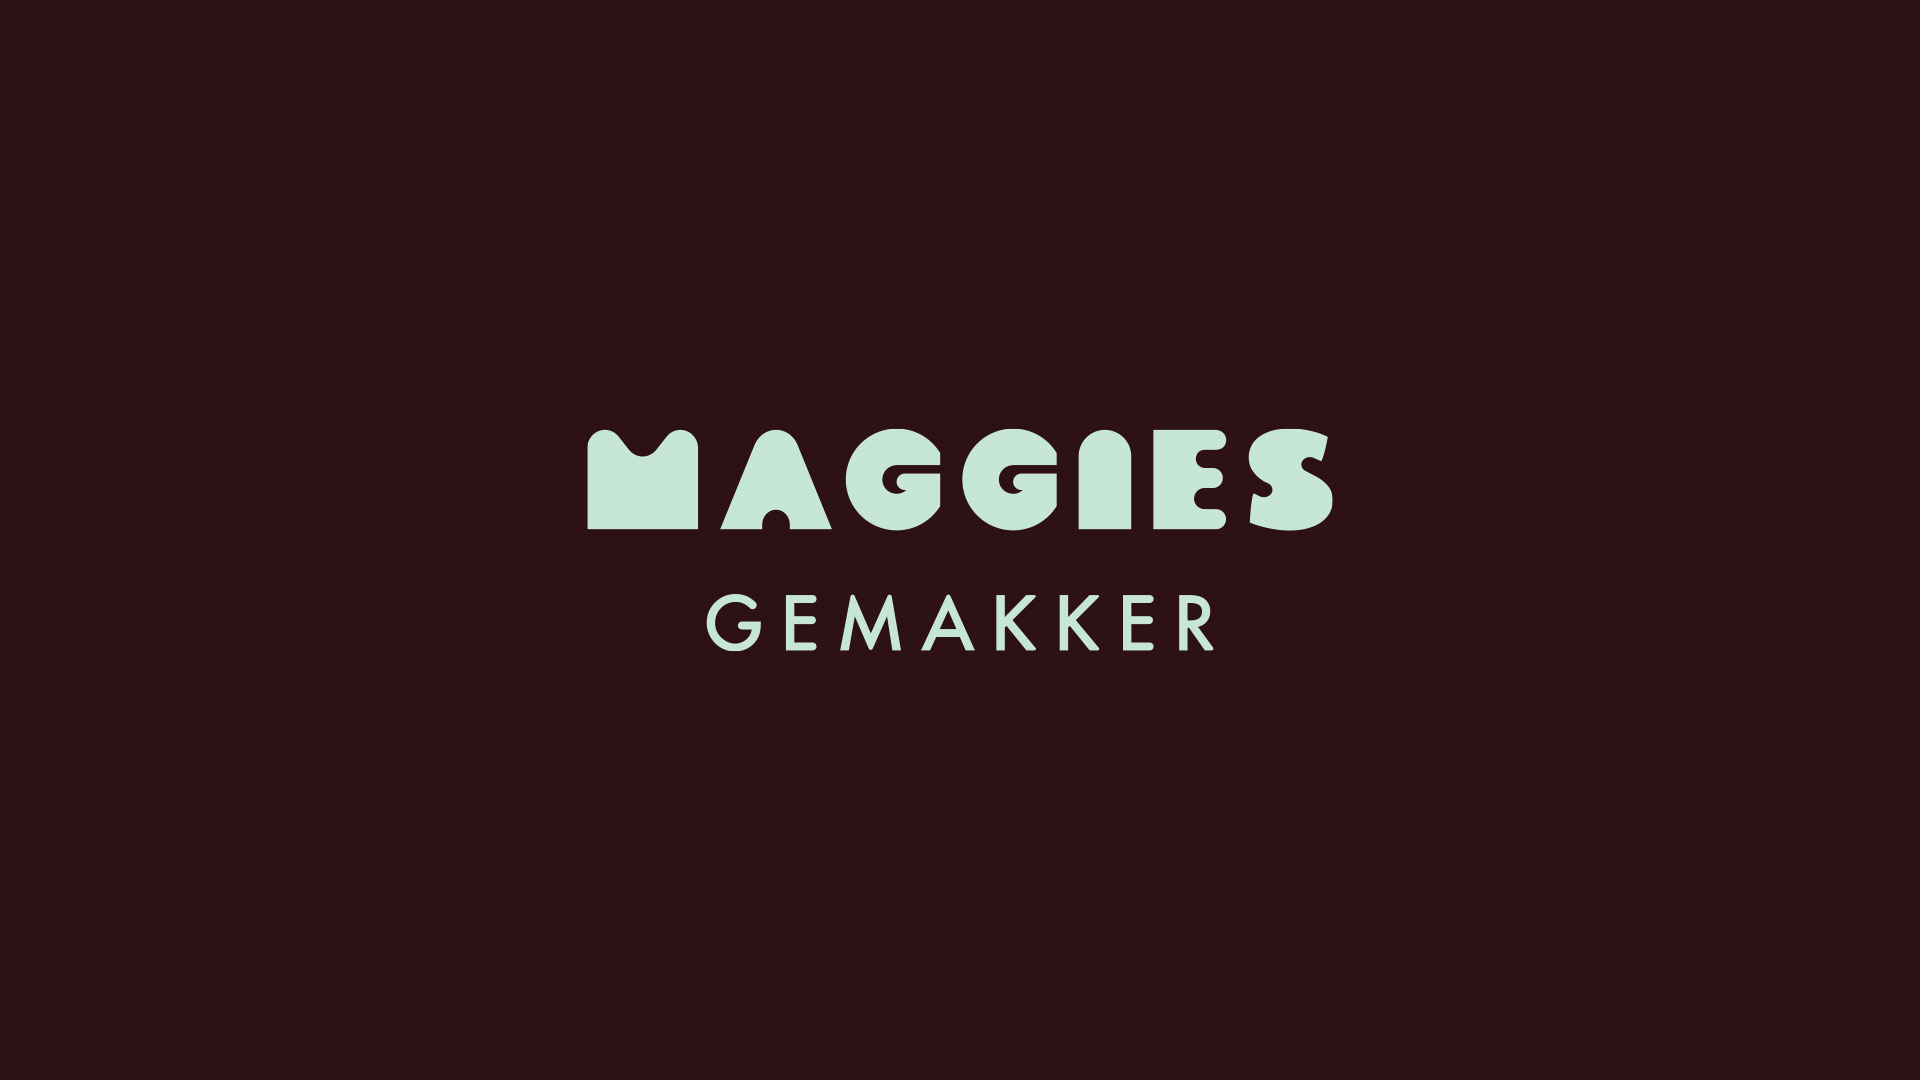 Maggies-logo-visual-identity-dark